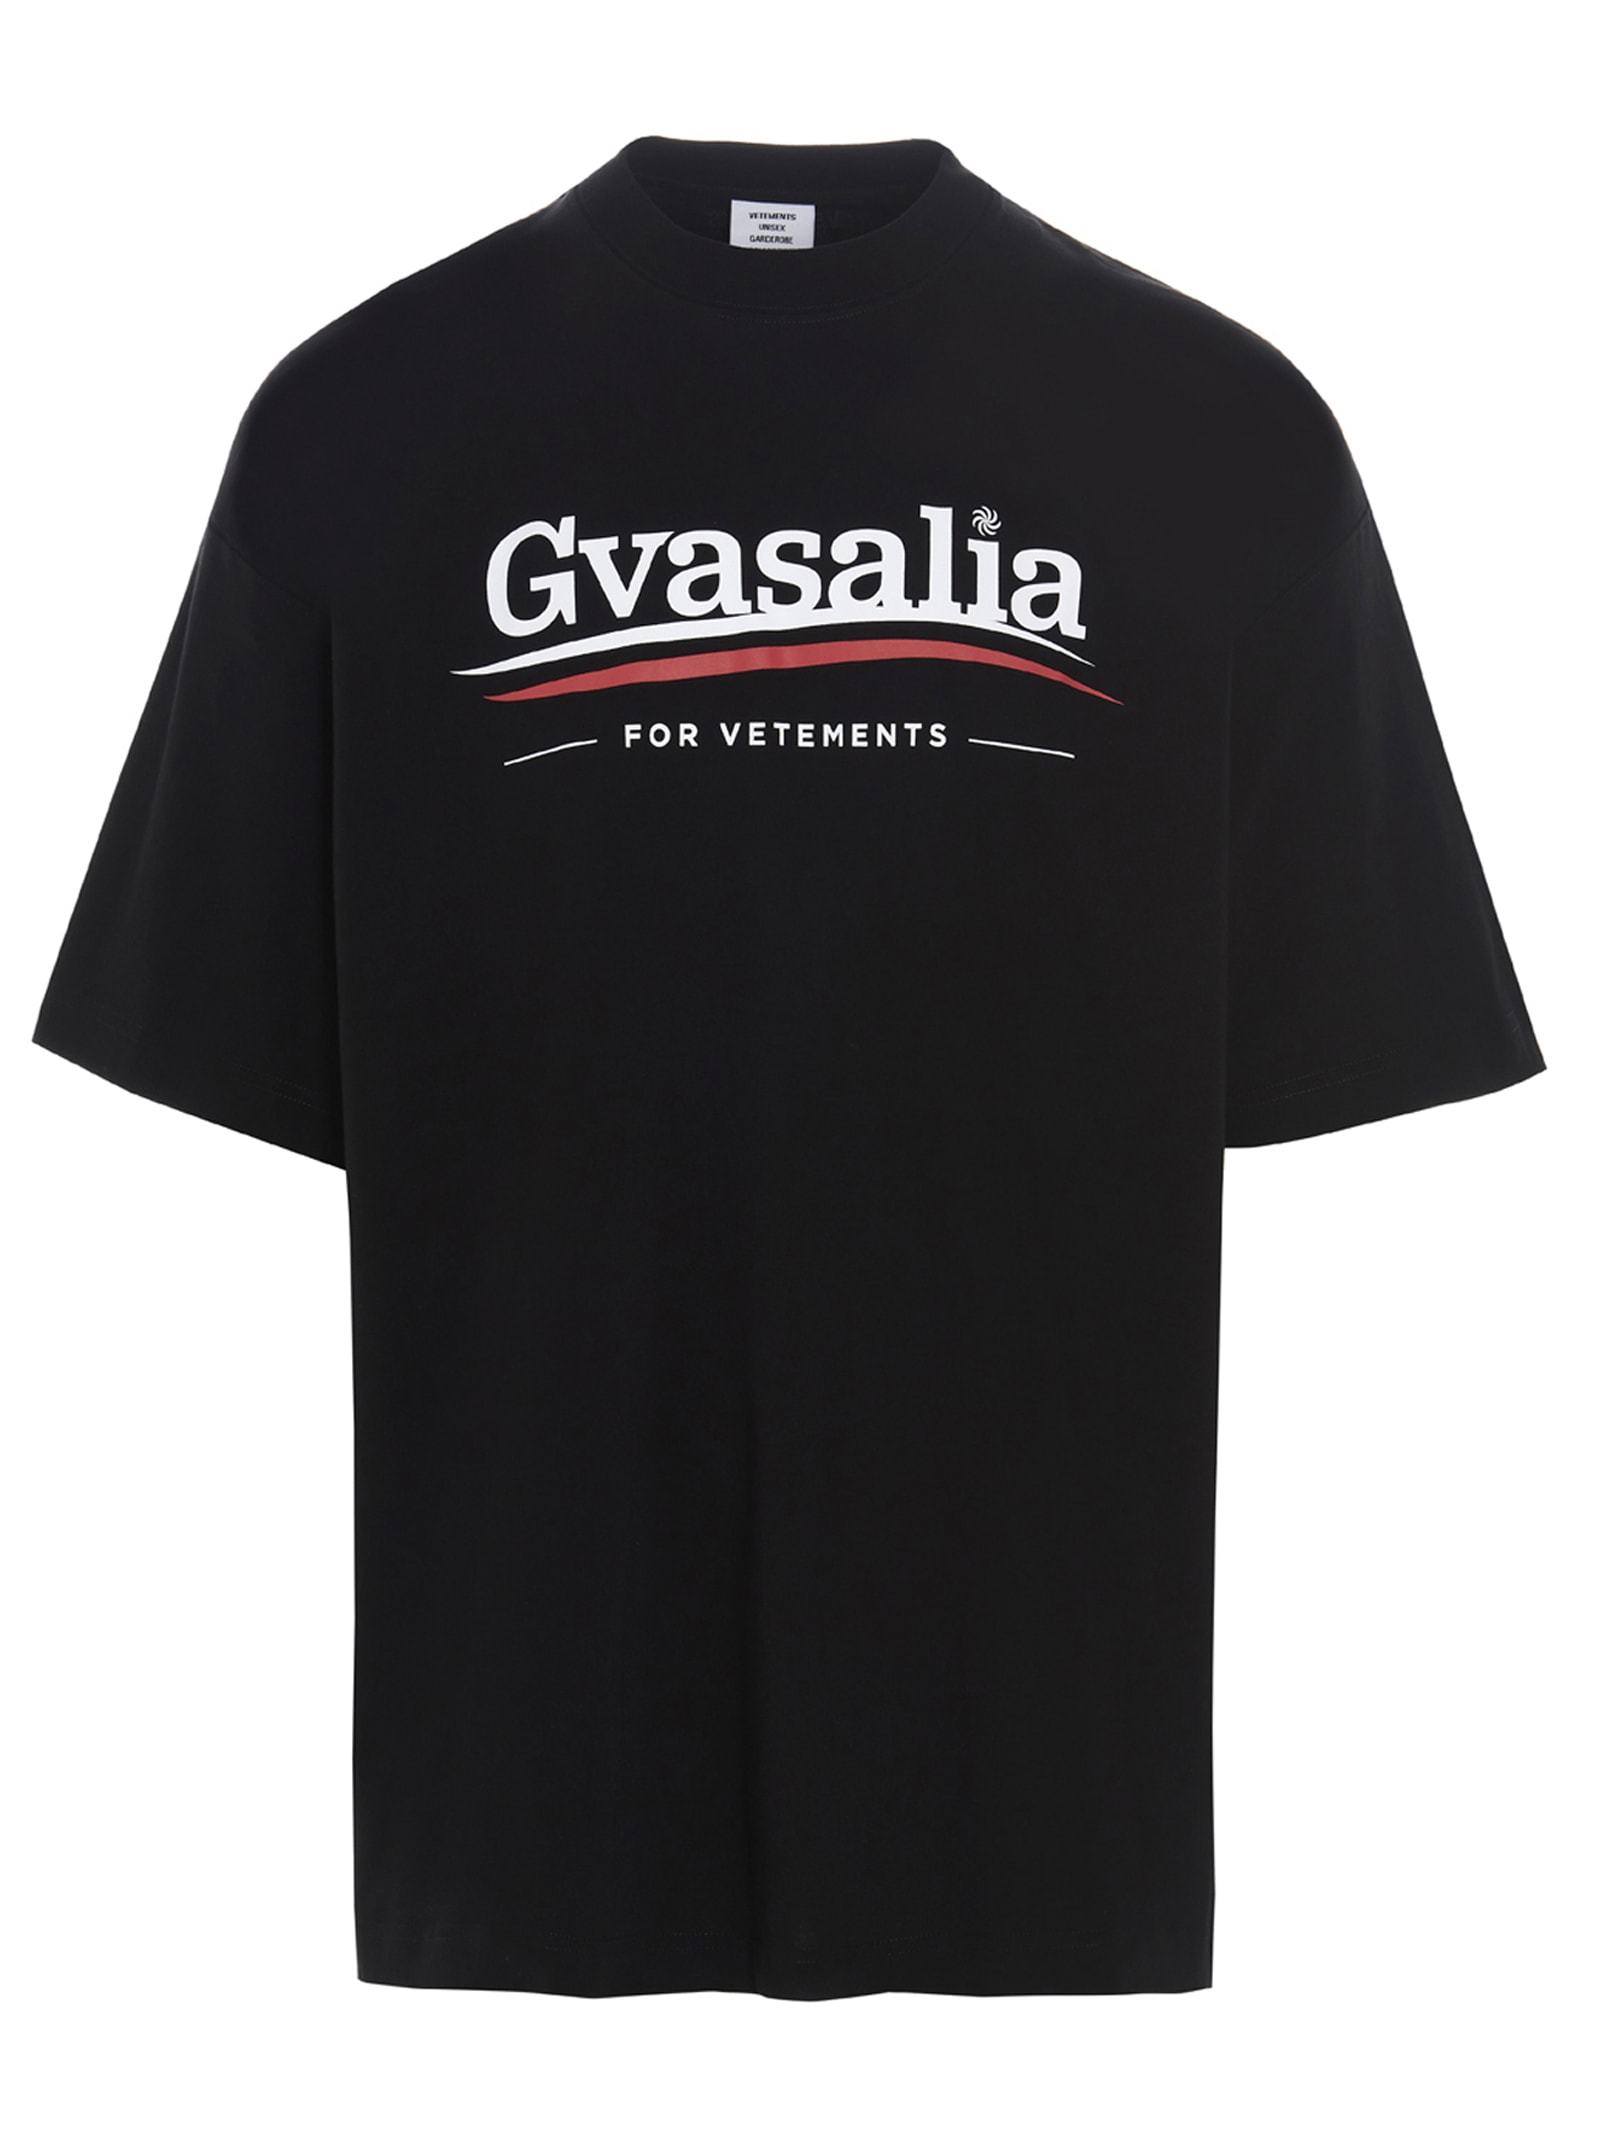 VETEMENTS gvasalia For T-shirt